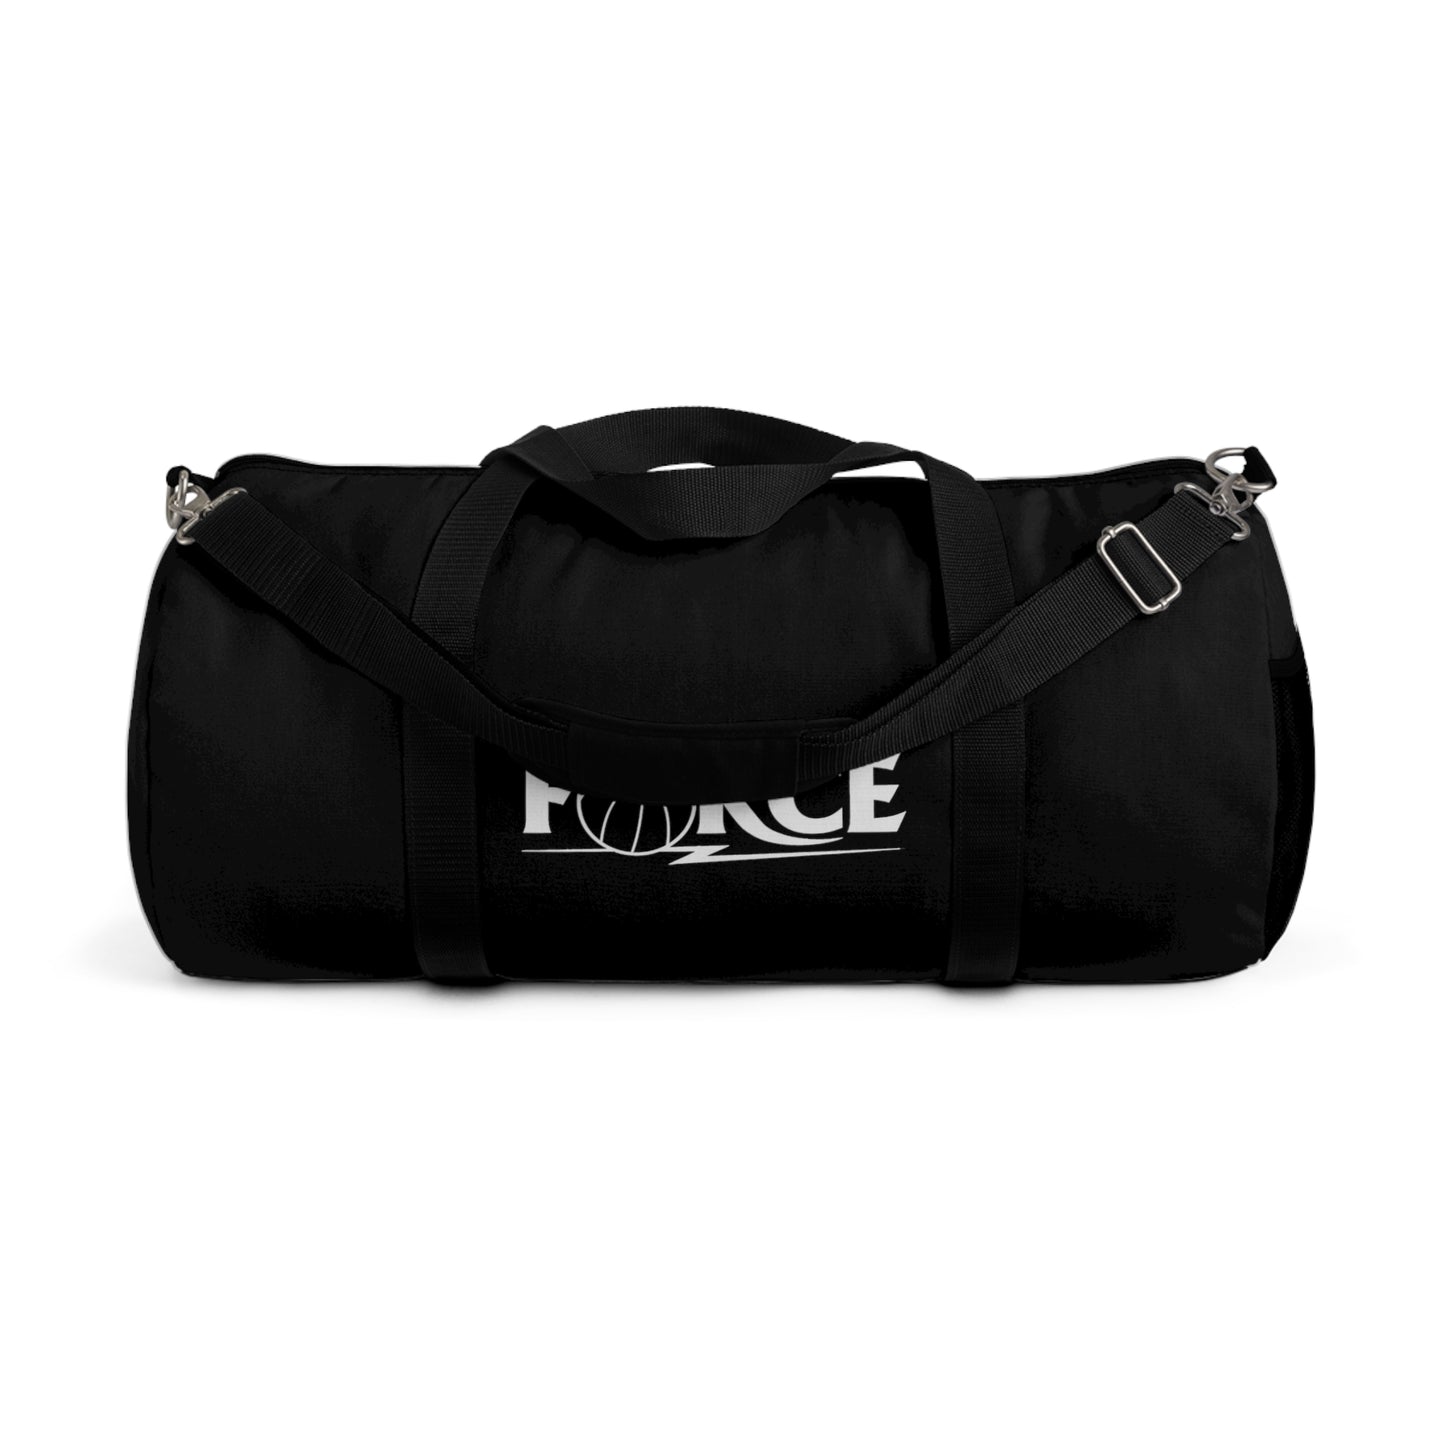 The Force Black Duffel Bag